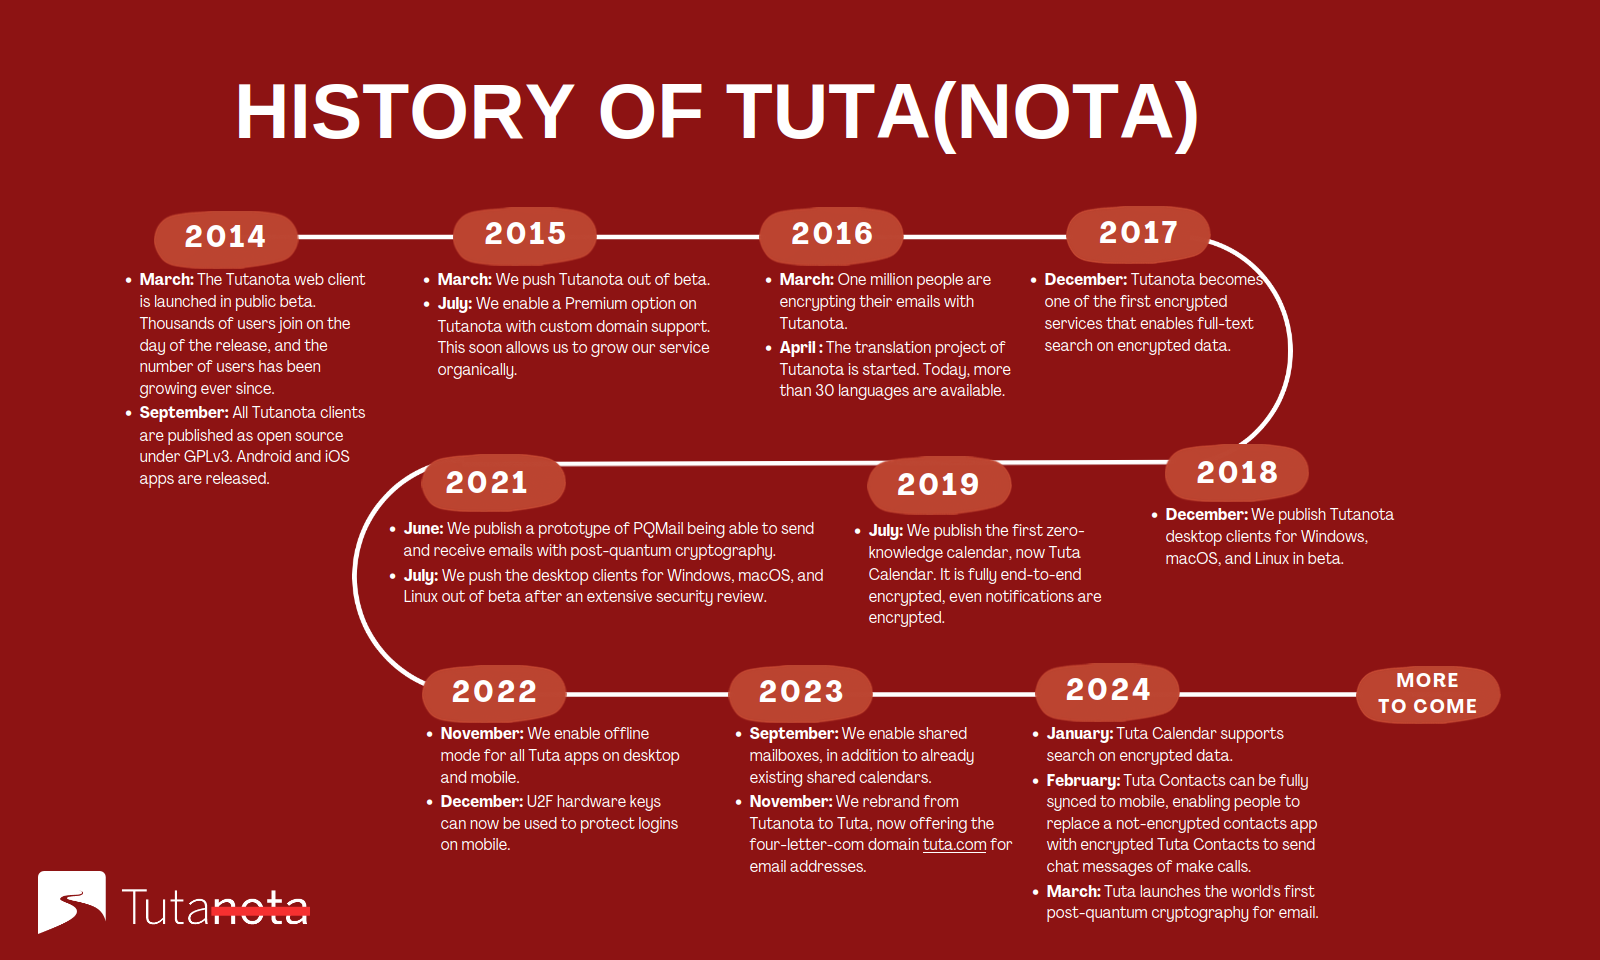 History of Tuta(nota): Achievements from 2014 - 2024